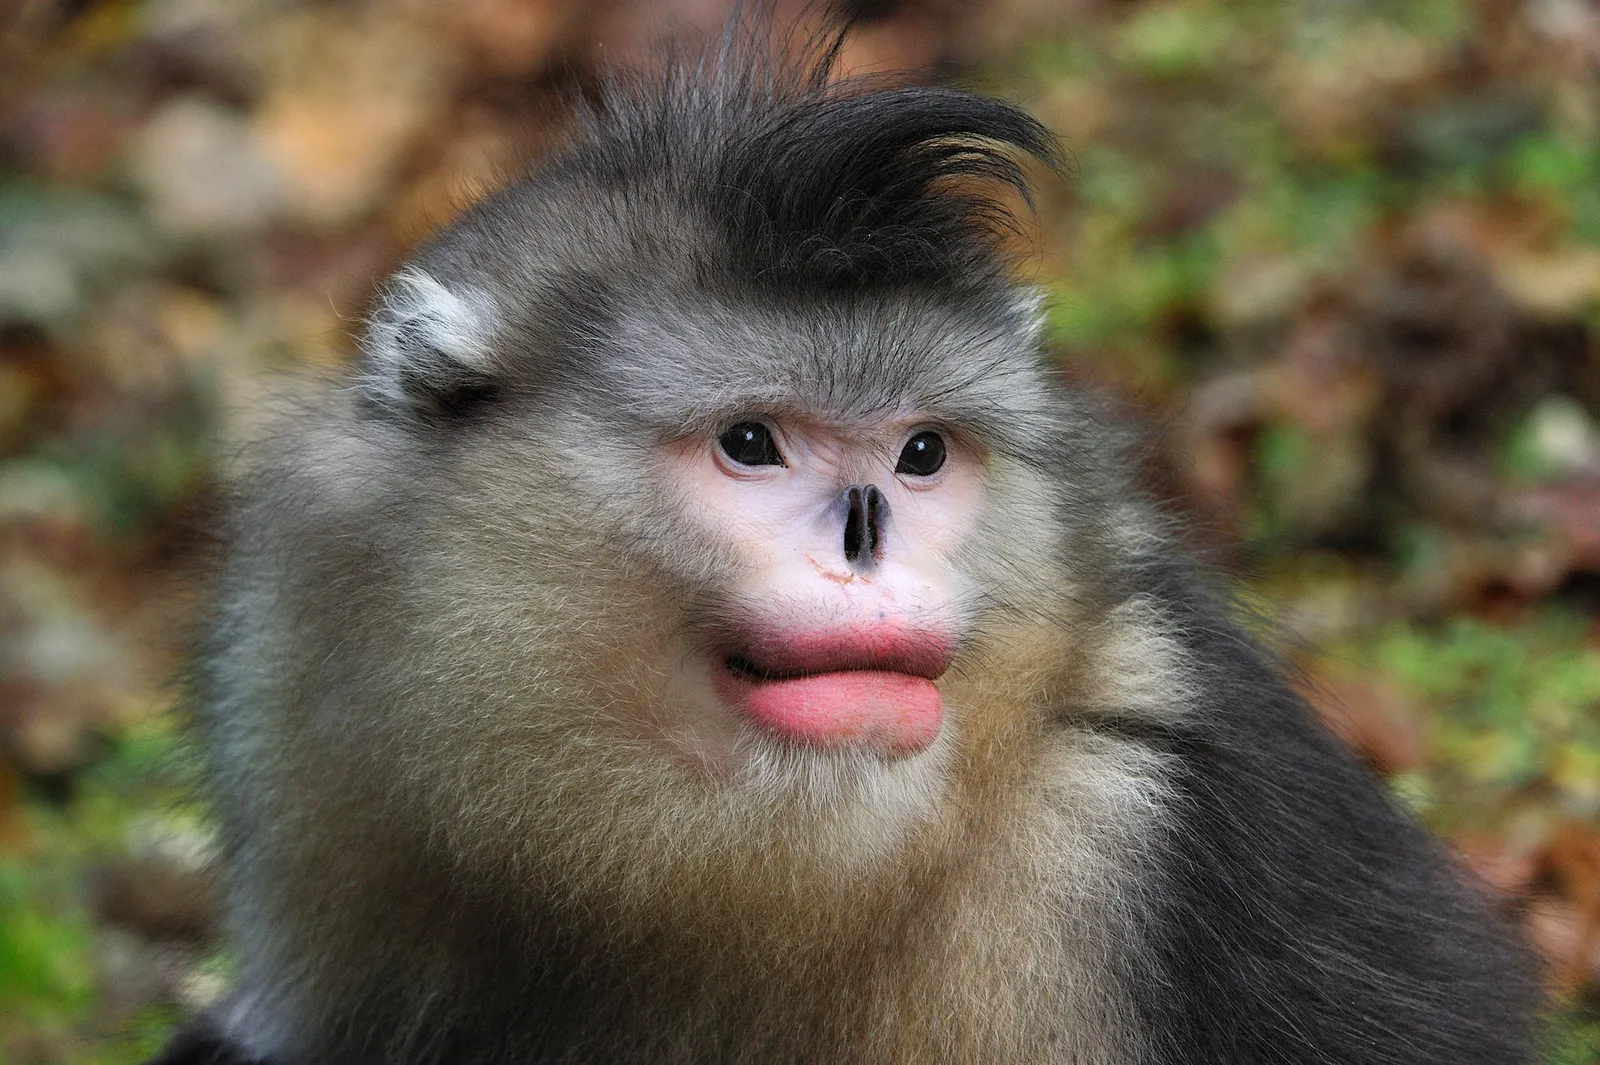 Monkeys Like Full Red Lips, Too | Smart News| Smithsonian Magazine